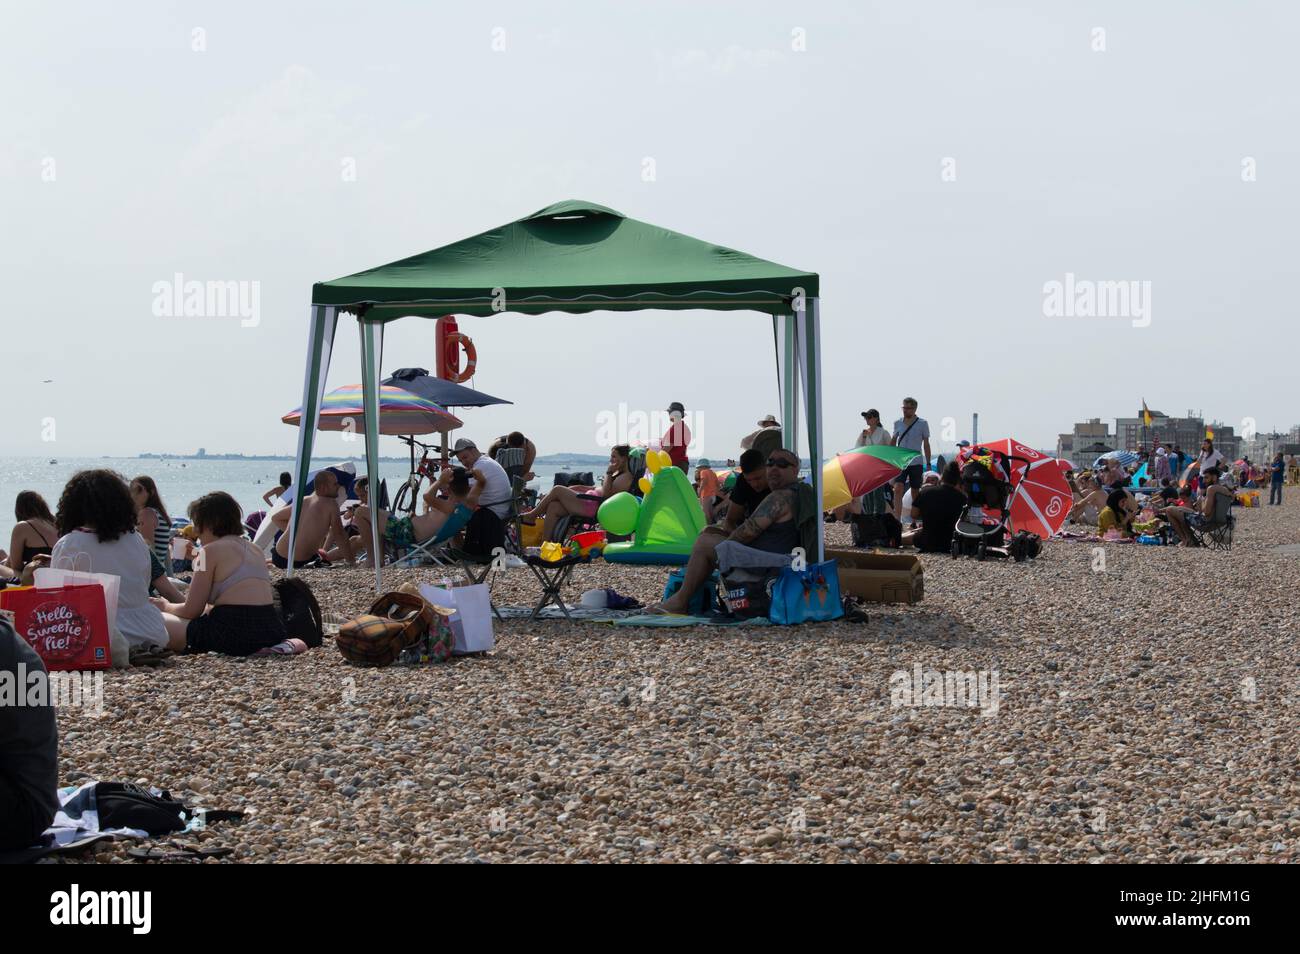 Gazebo tent to beat heat in Brighton beach Heatwave 2022 Stock Photo